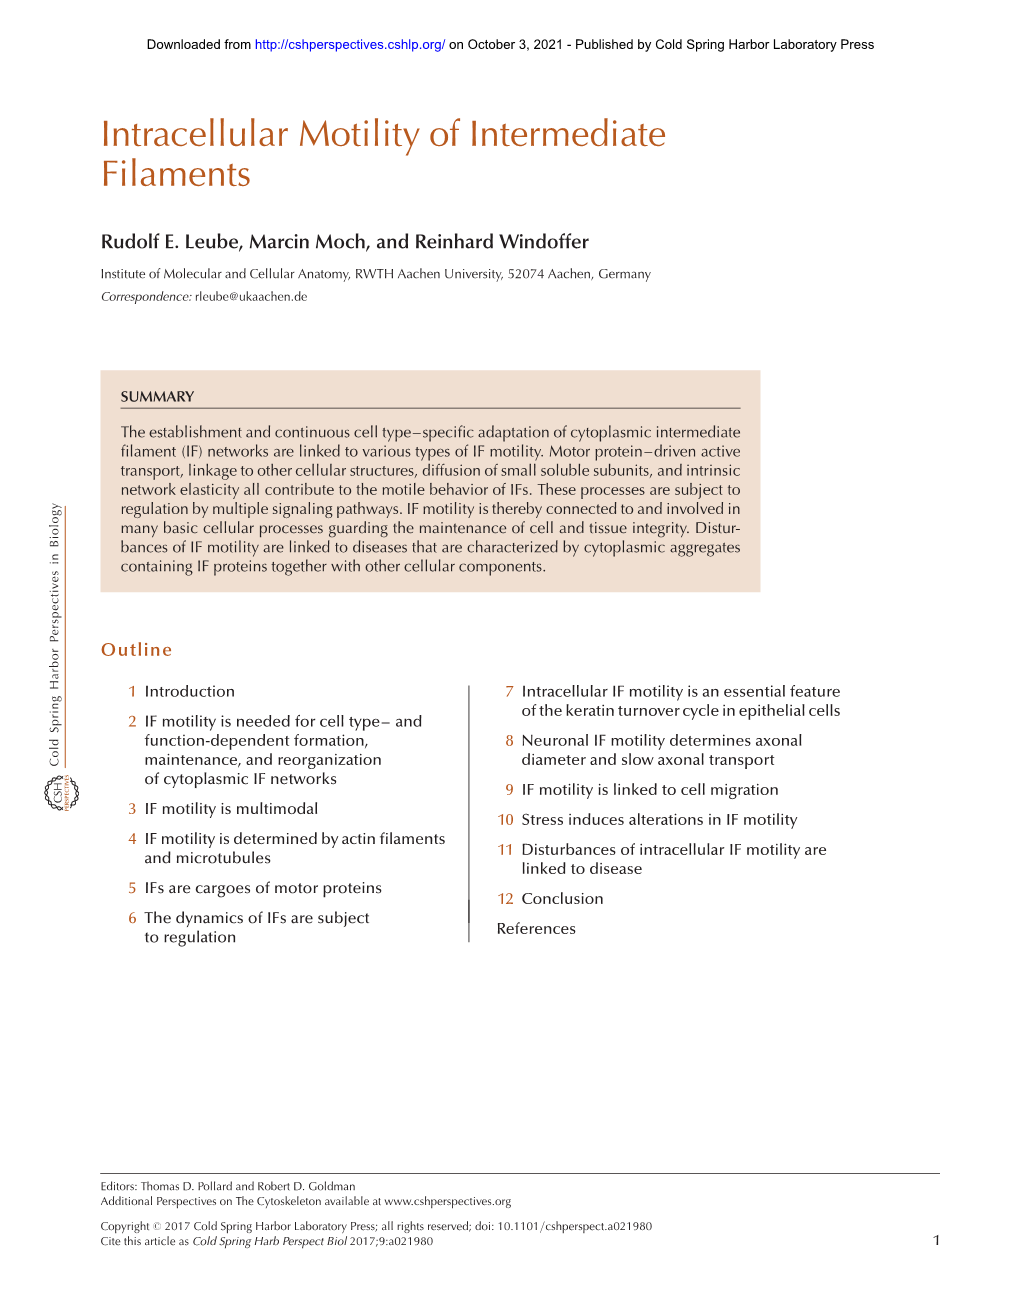 Intracellular Motility of Intermediate Filaments